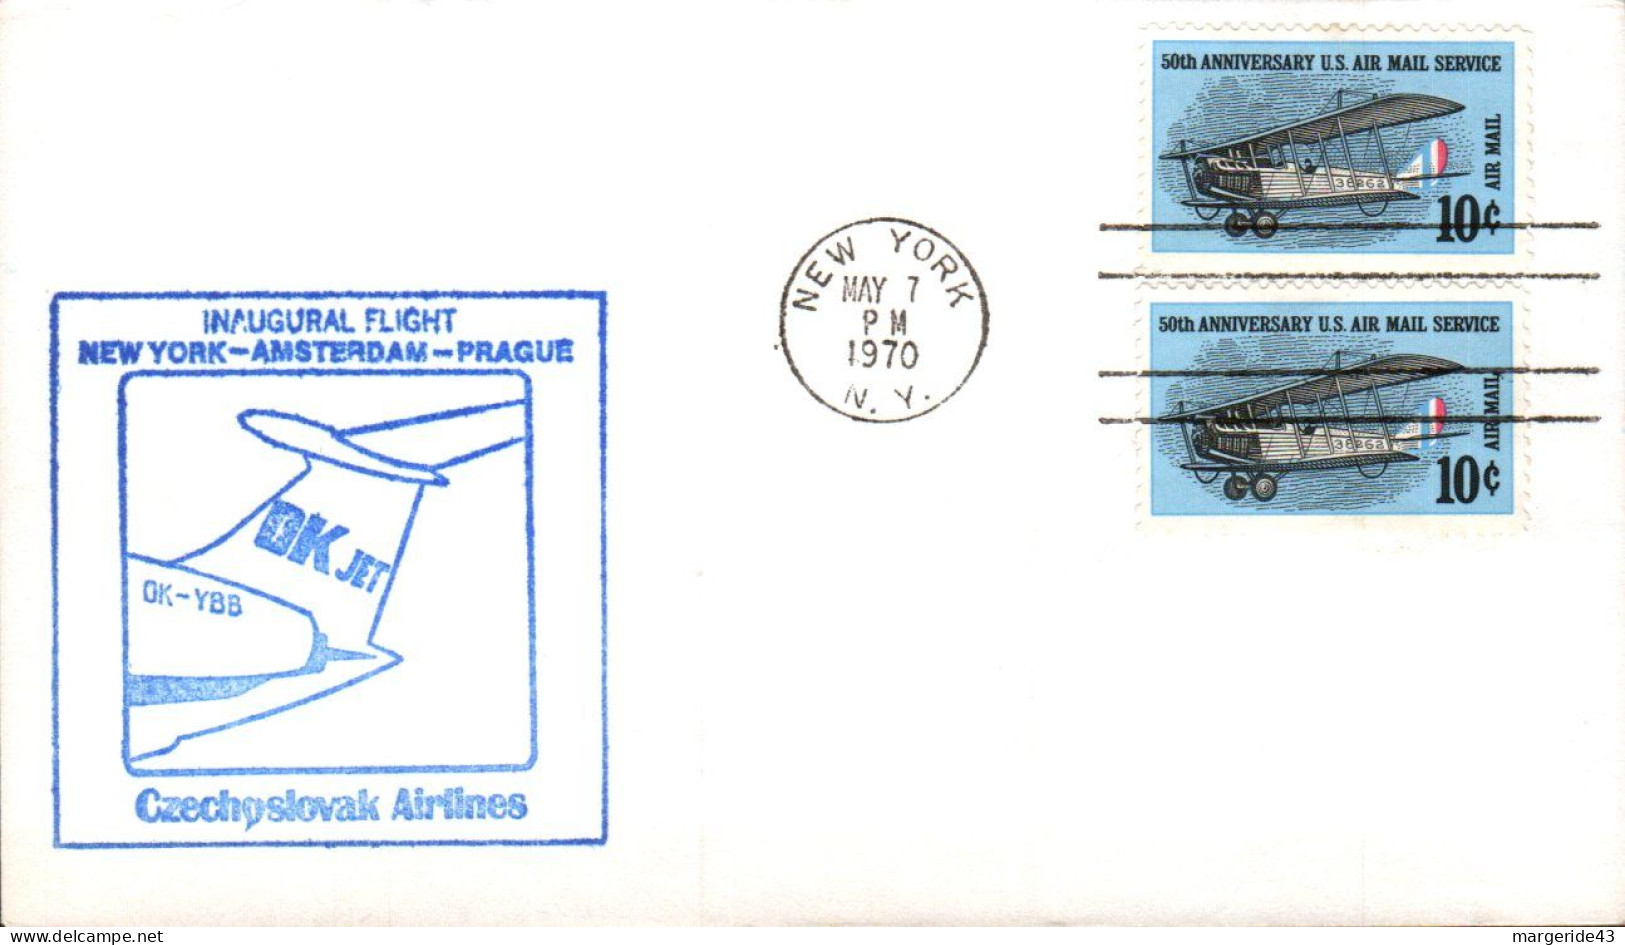 USA ETATS UNIS VOL INAUGURAL CZECHOSLOVAK AIRLINES NEW YORK-AMSTERDAM-PRAGUE 1970 - Event Covers